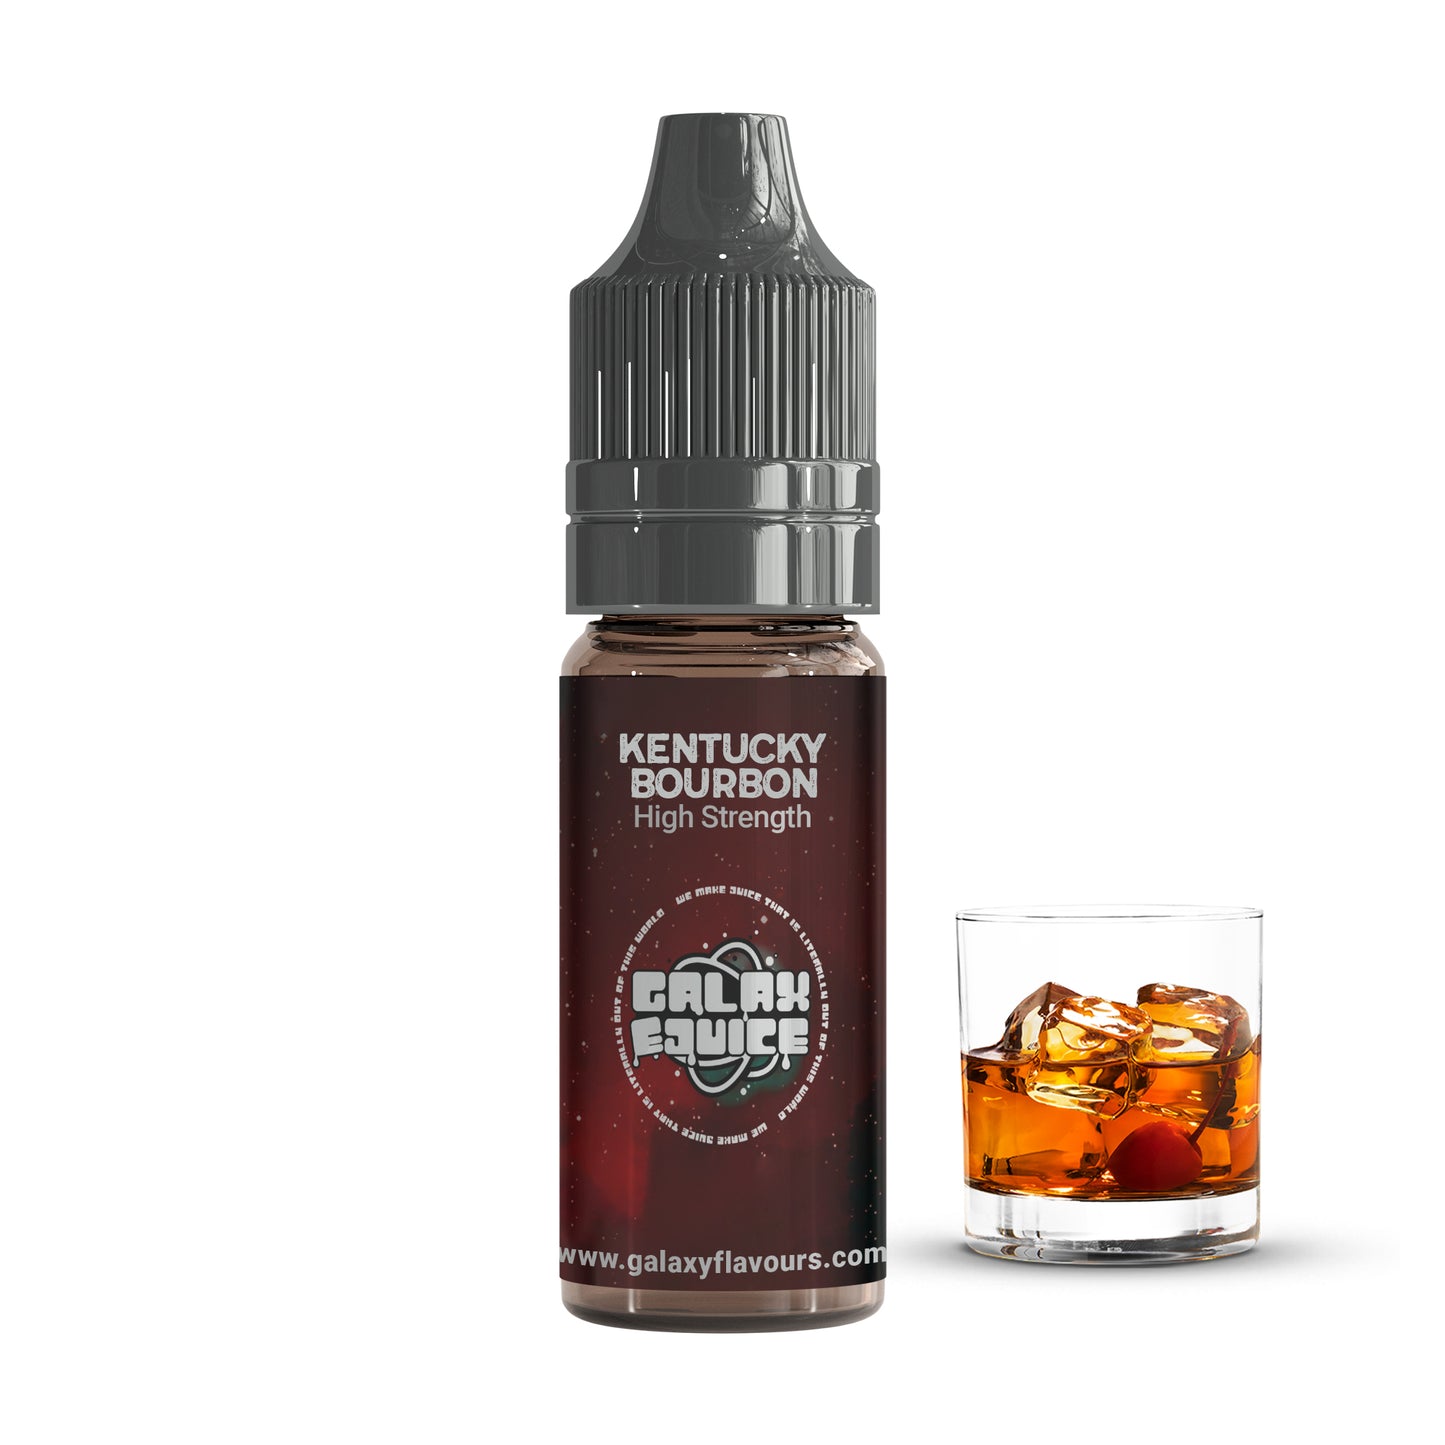 Kentucky Bourbon High Strength Professional Flavouring.